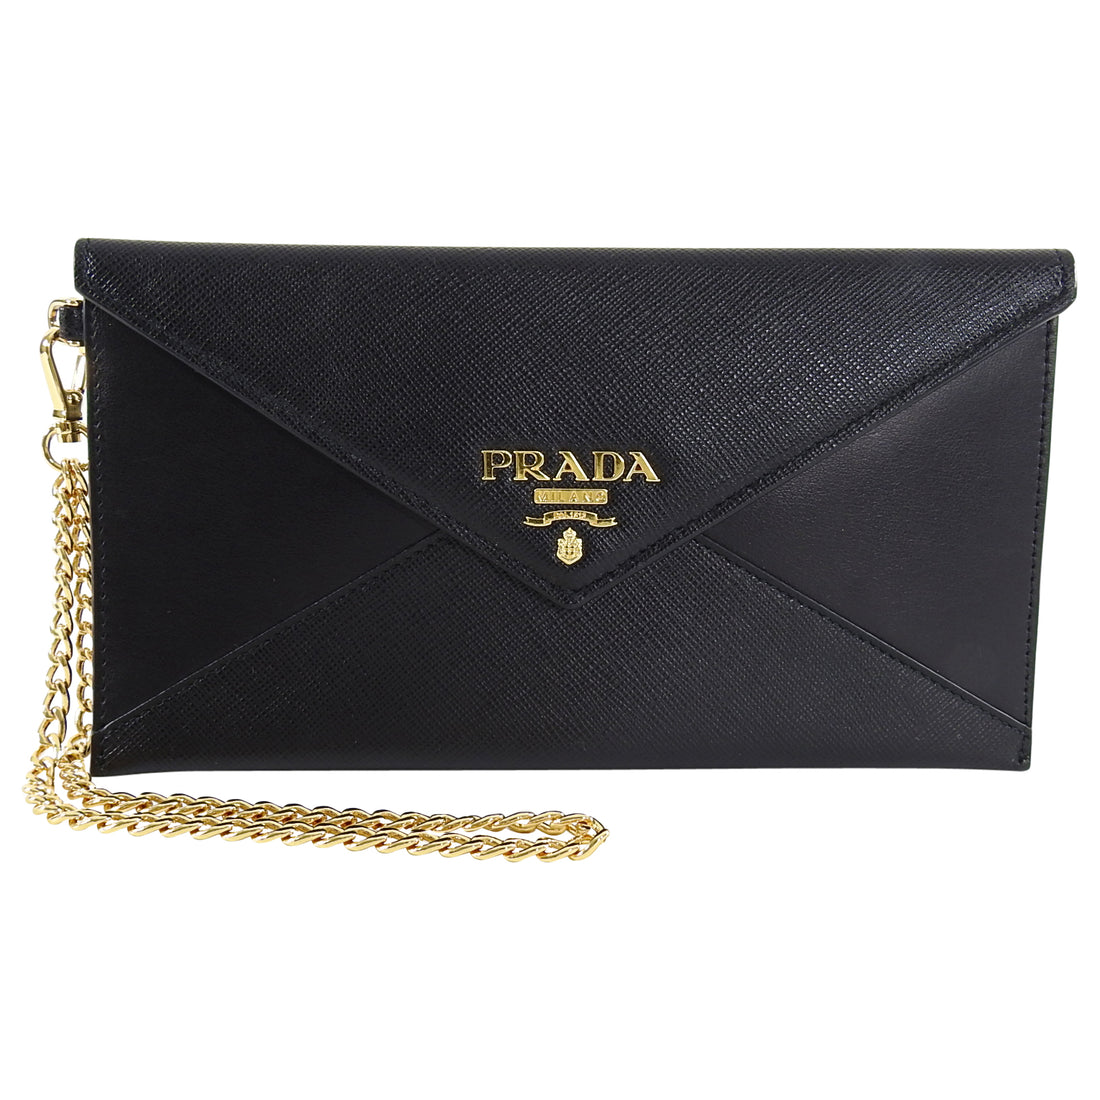 Prada Wallet on Chain Bags